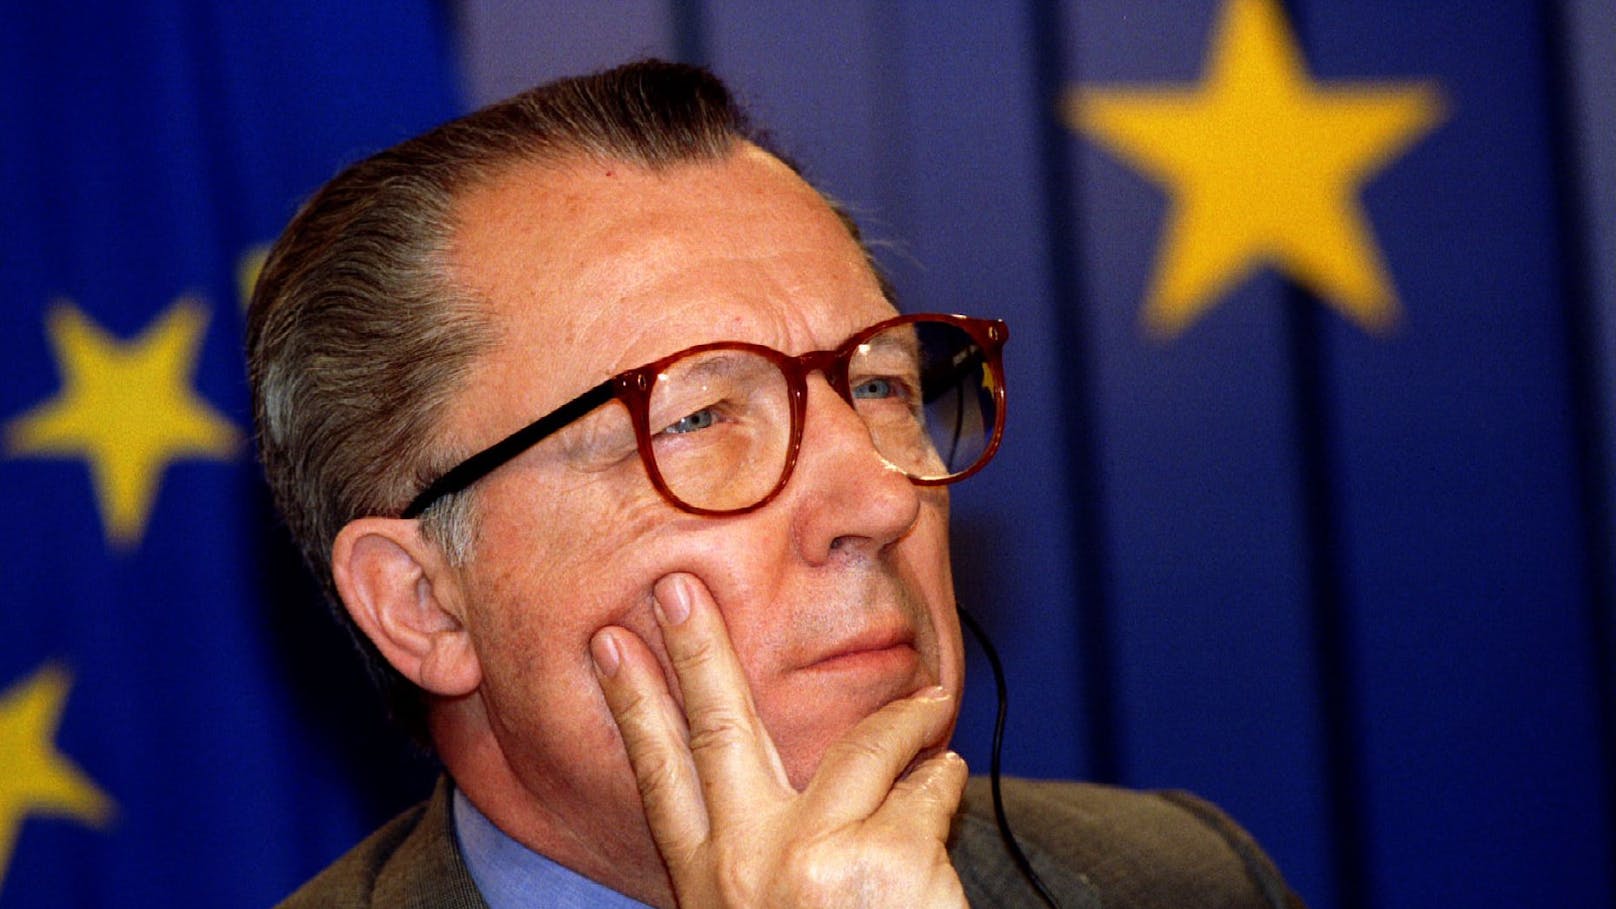 "Vater des Euros" – Jacques Delors (98) ist tot